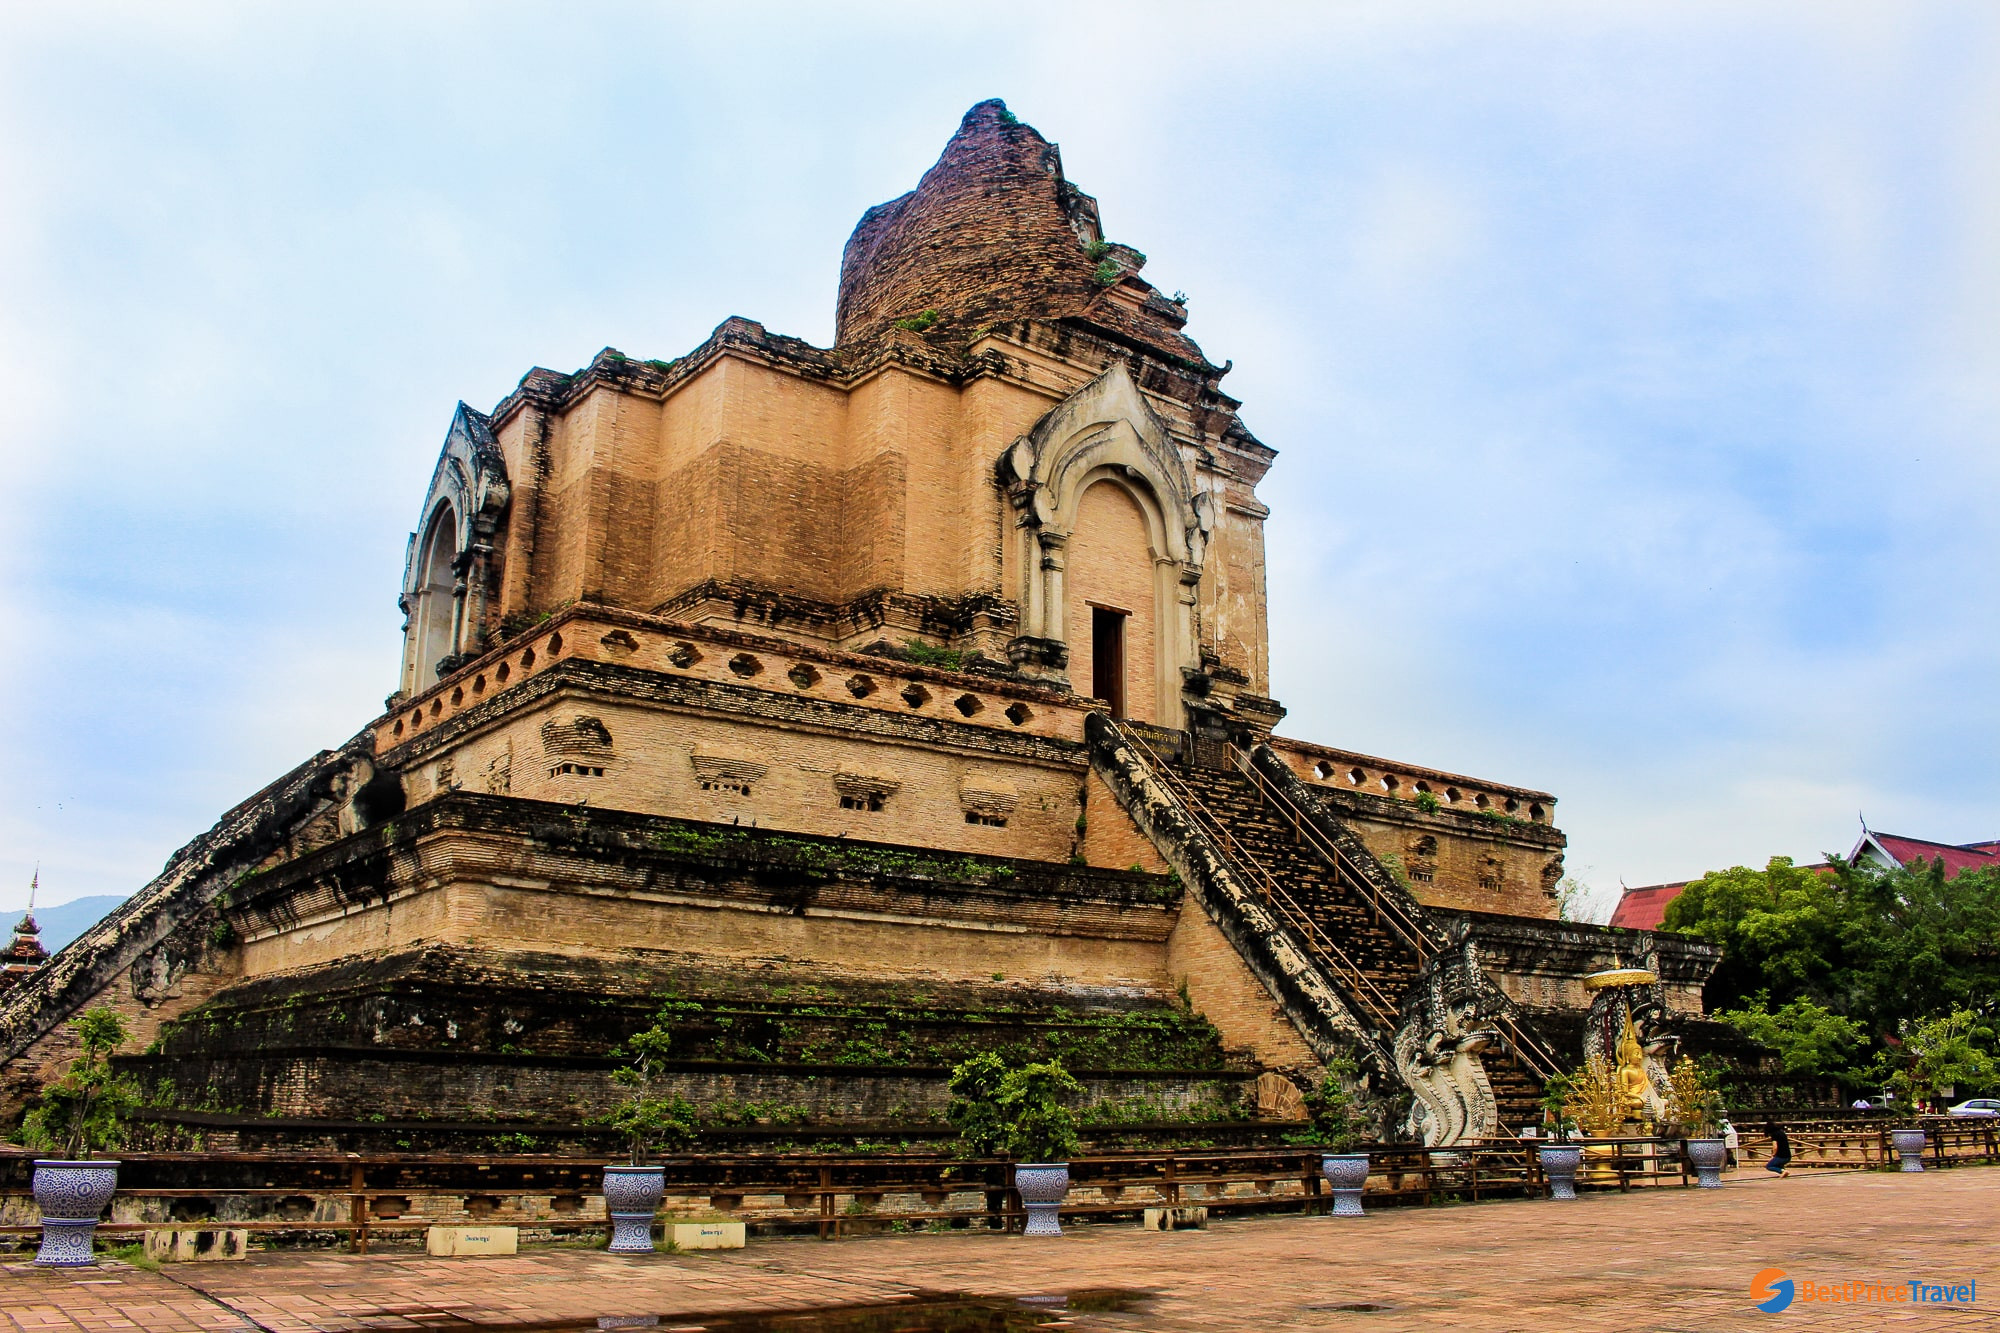 Chiang Mai Pagoda